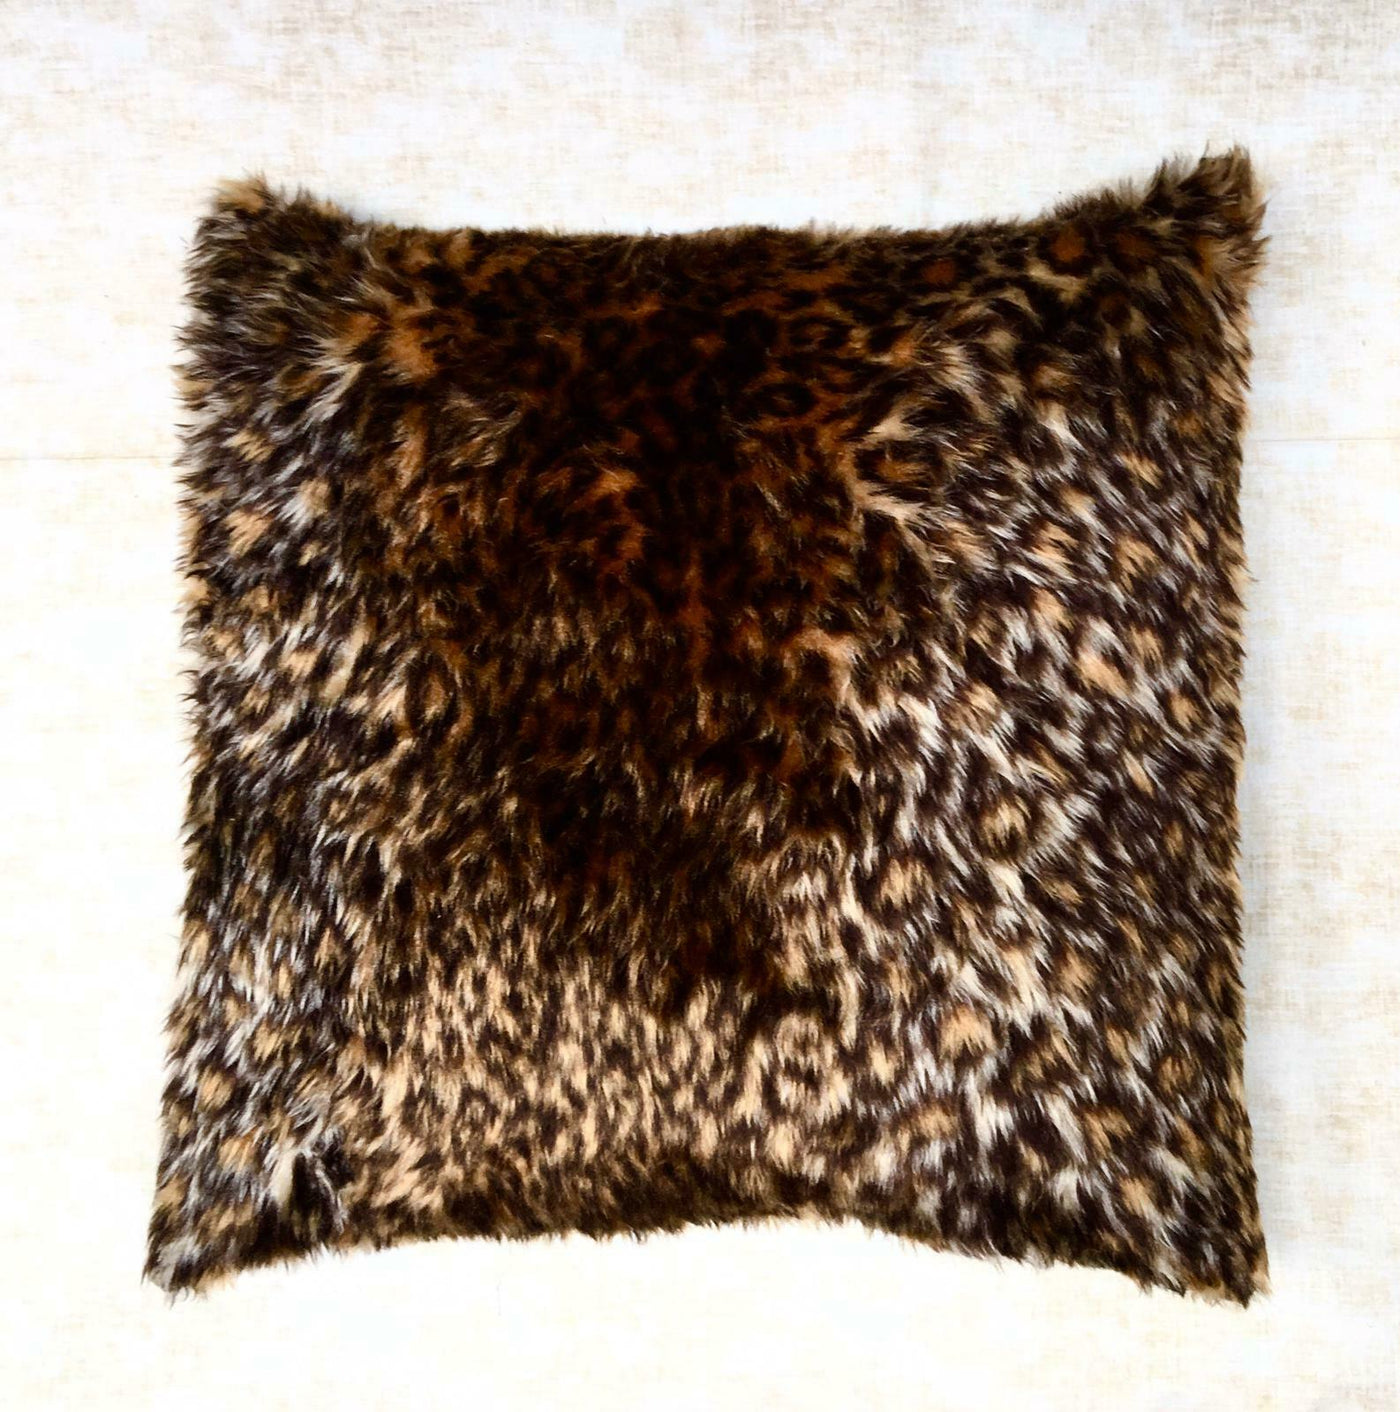 Baby Leopard Faux Fur Cushion Cover Case fits 18" x 18"